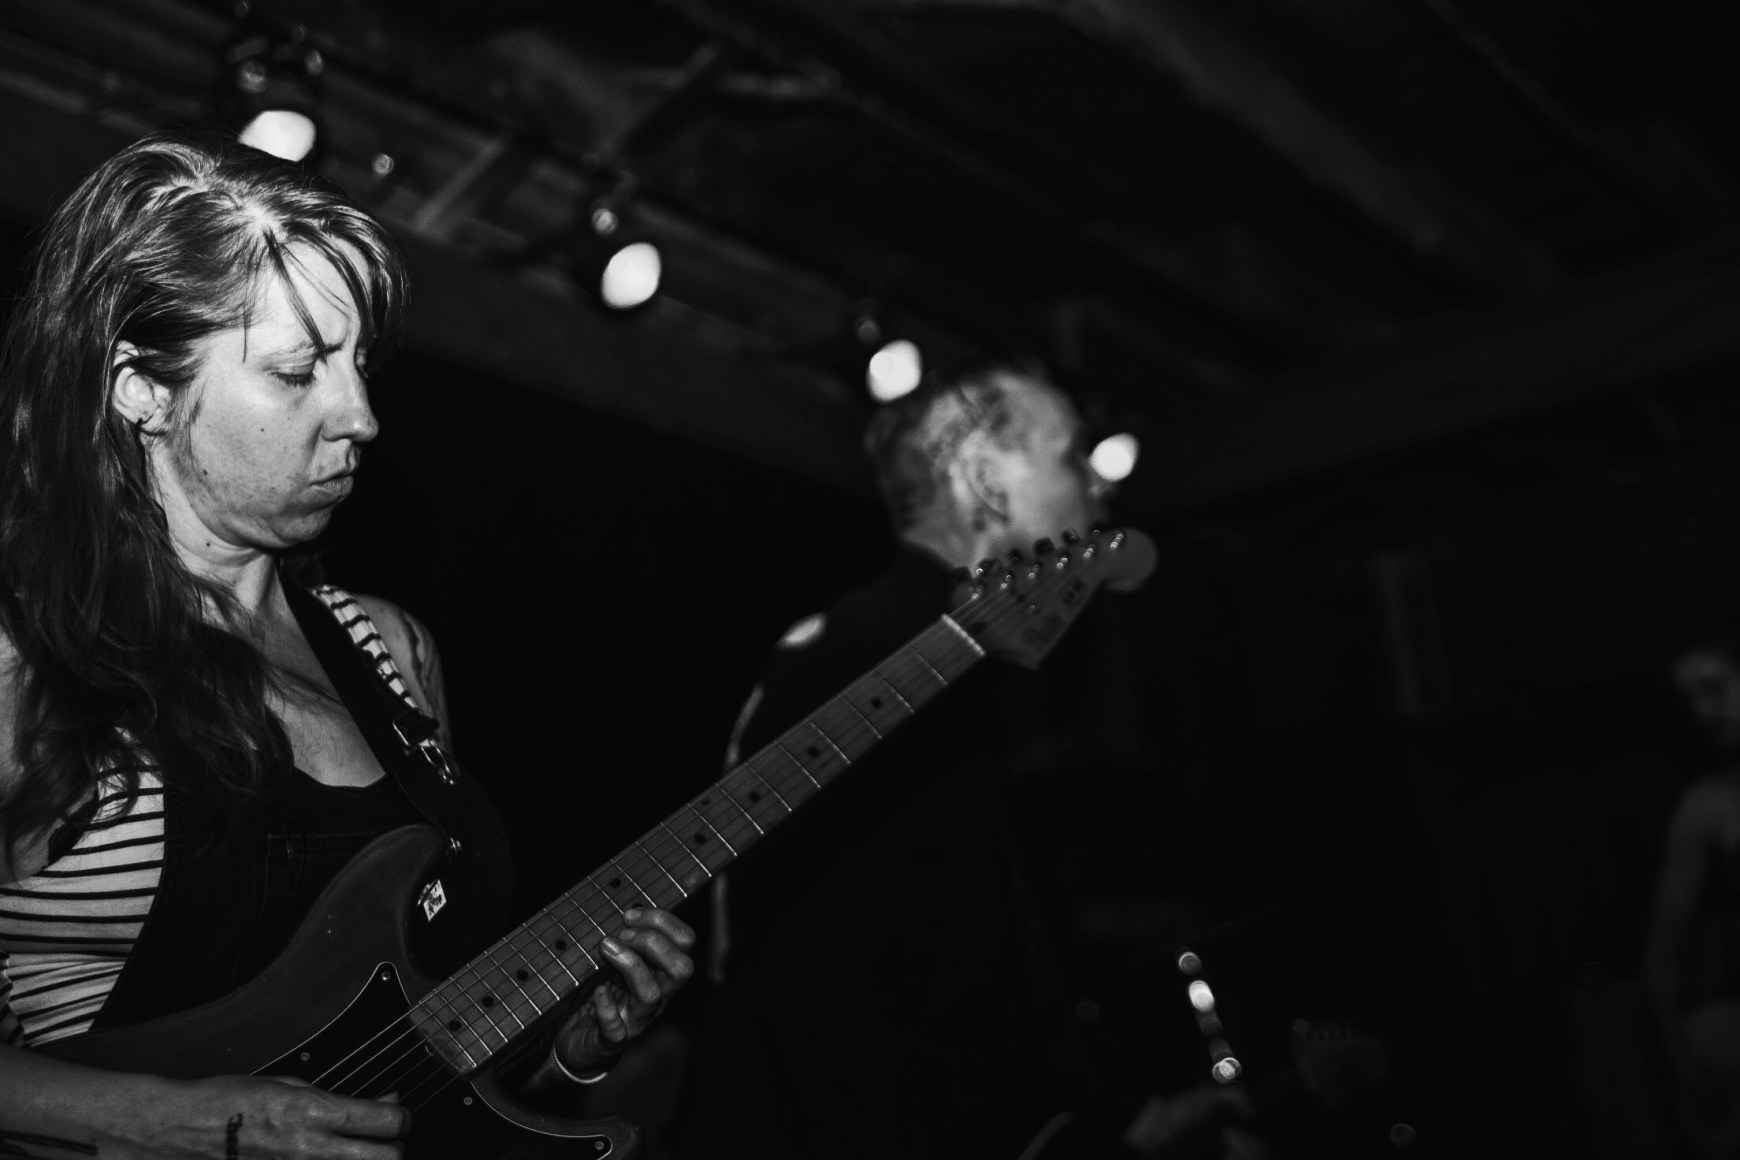 Sannhet performing at Barracuda in Austin, TX.